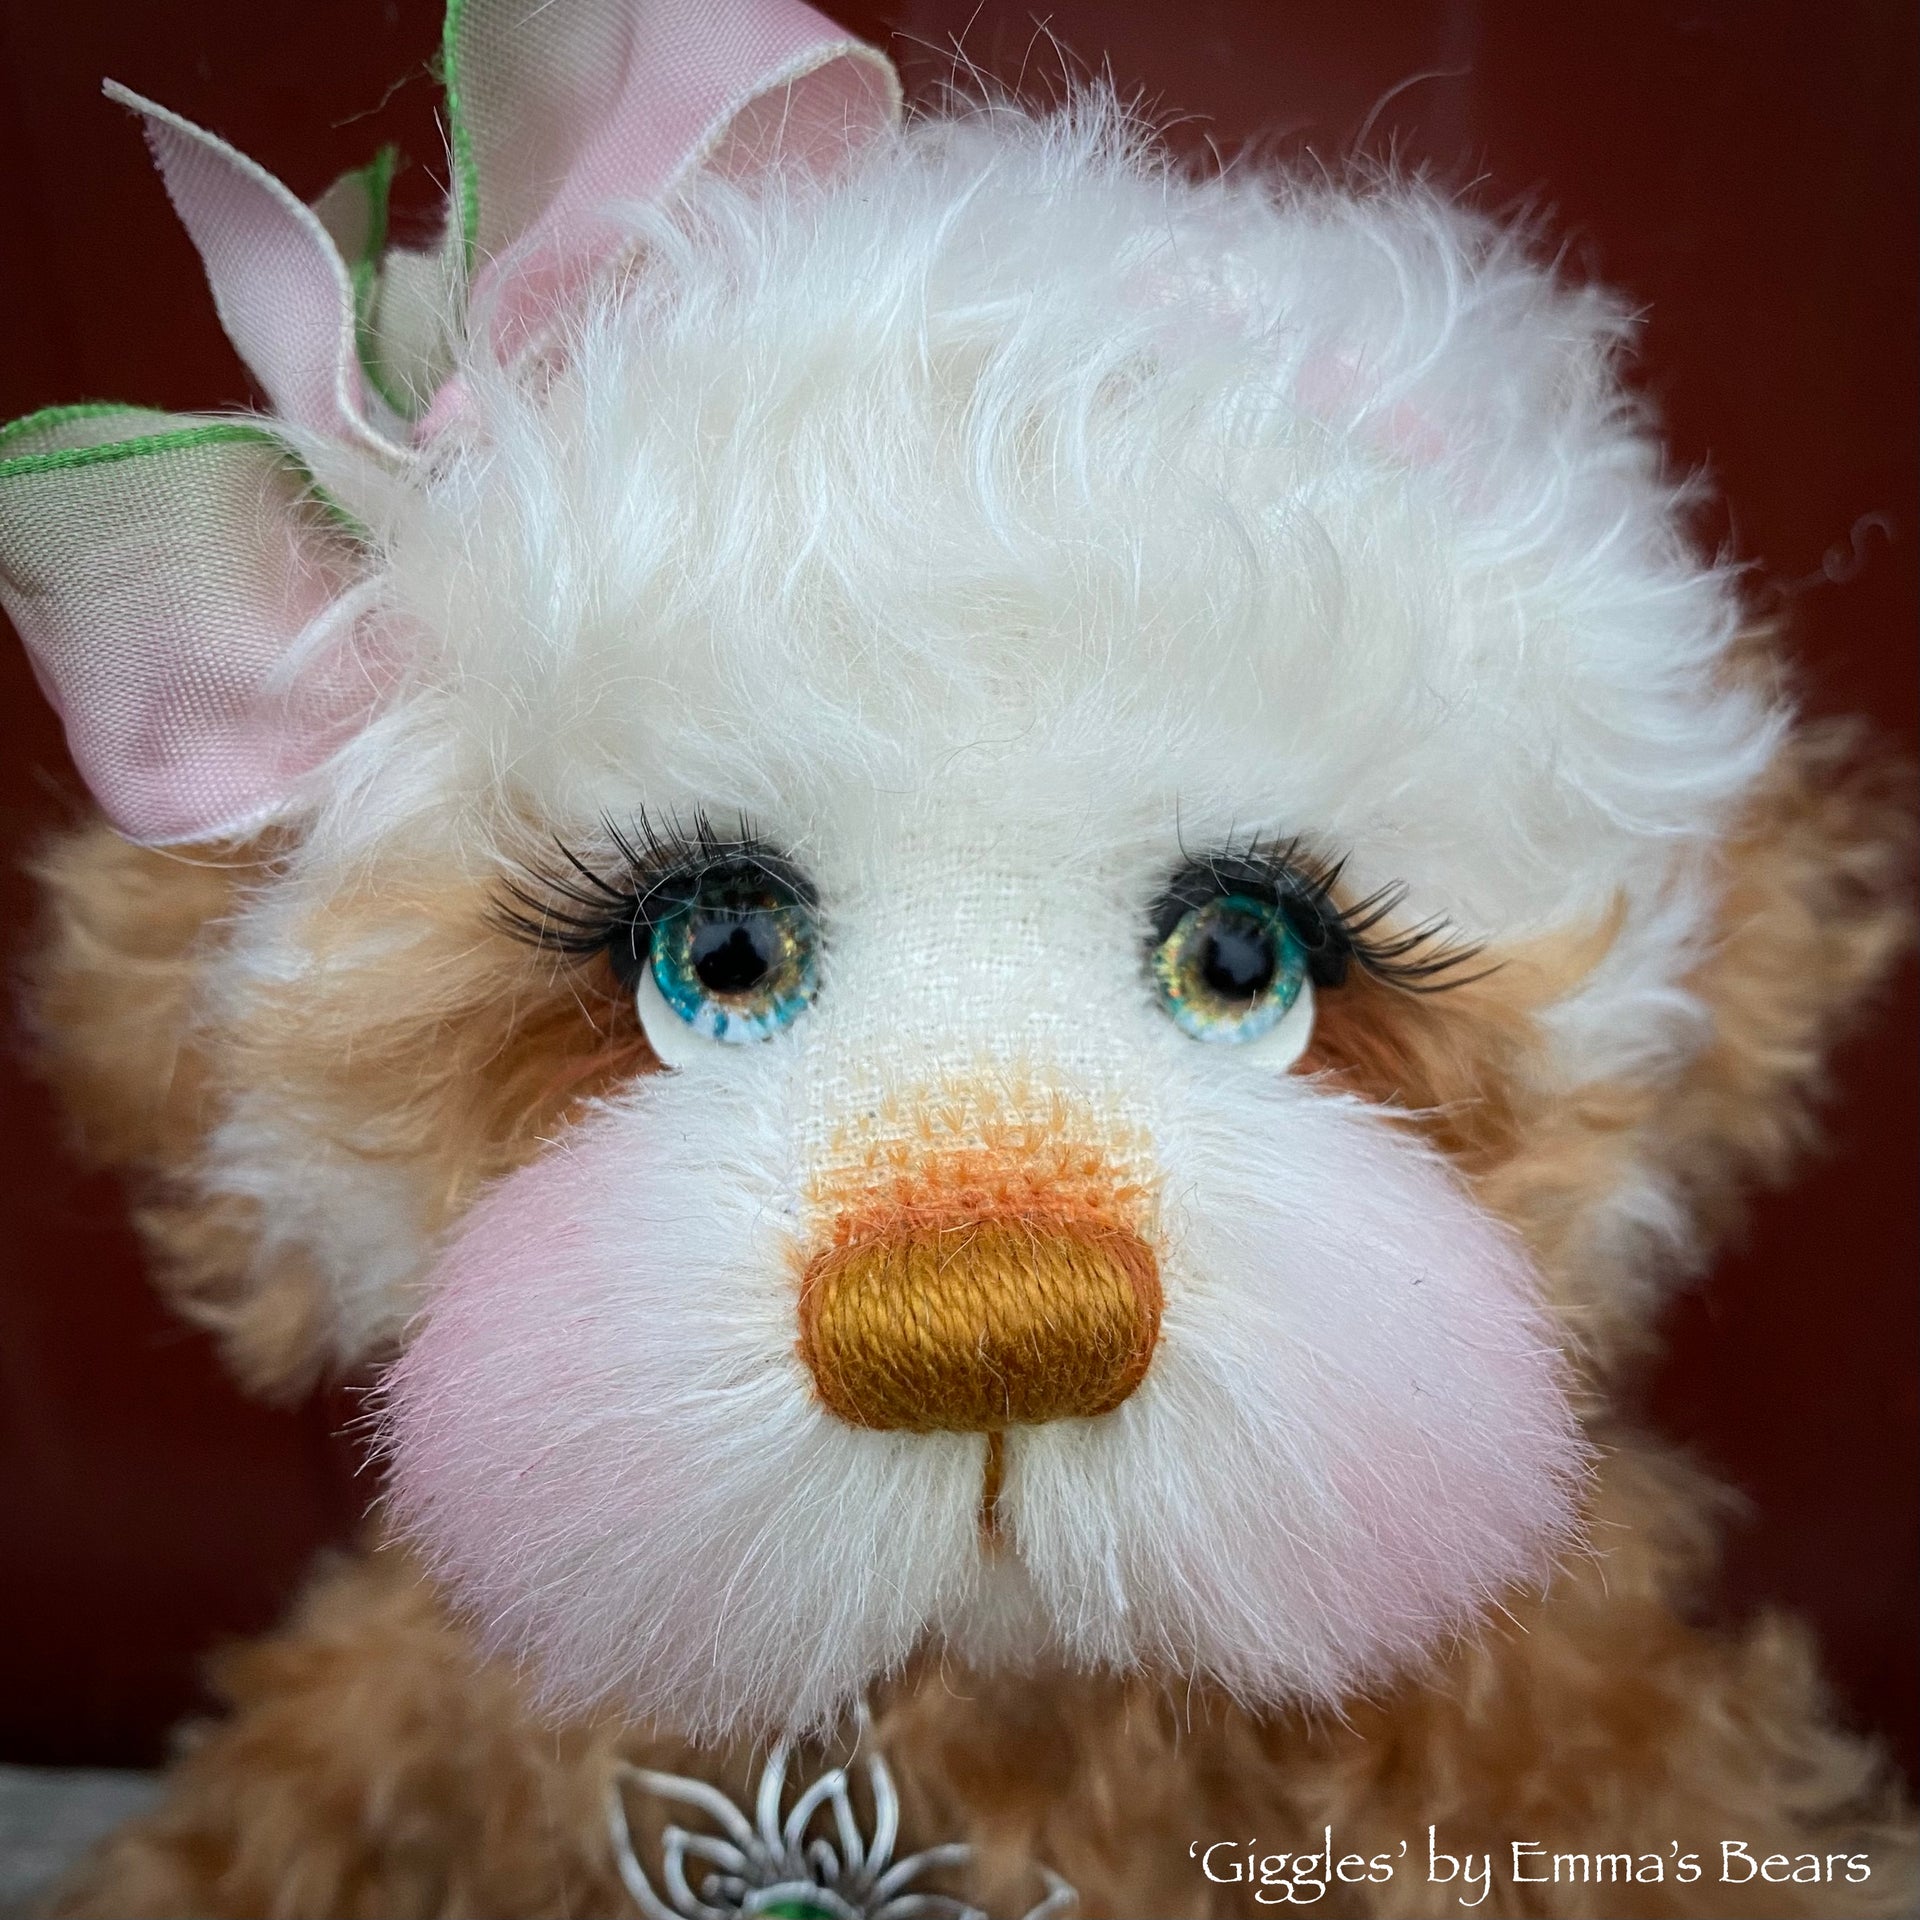 Giggles - 12" Curly Kid Mohair and Alpaca artist bear by Emma's Bears - OOAK